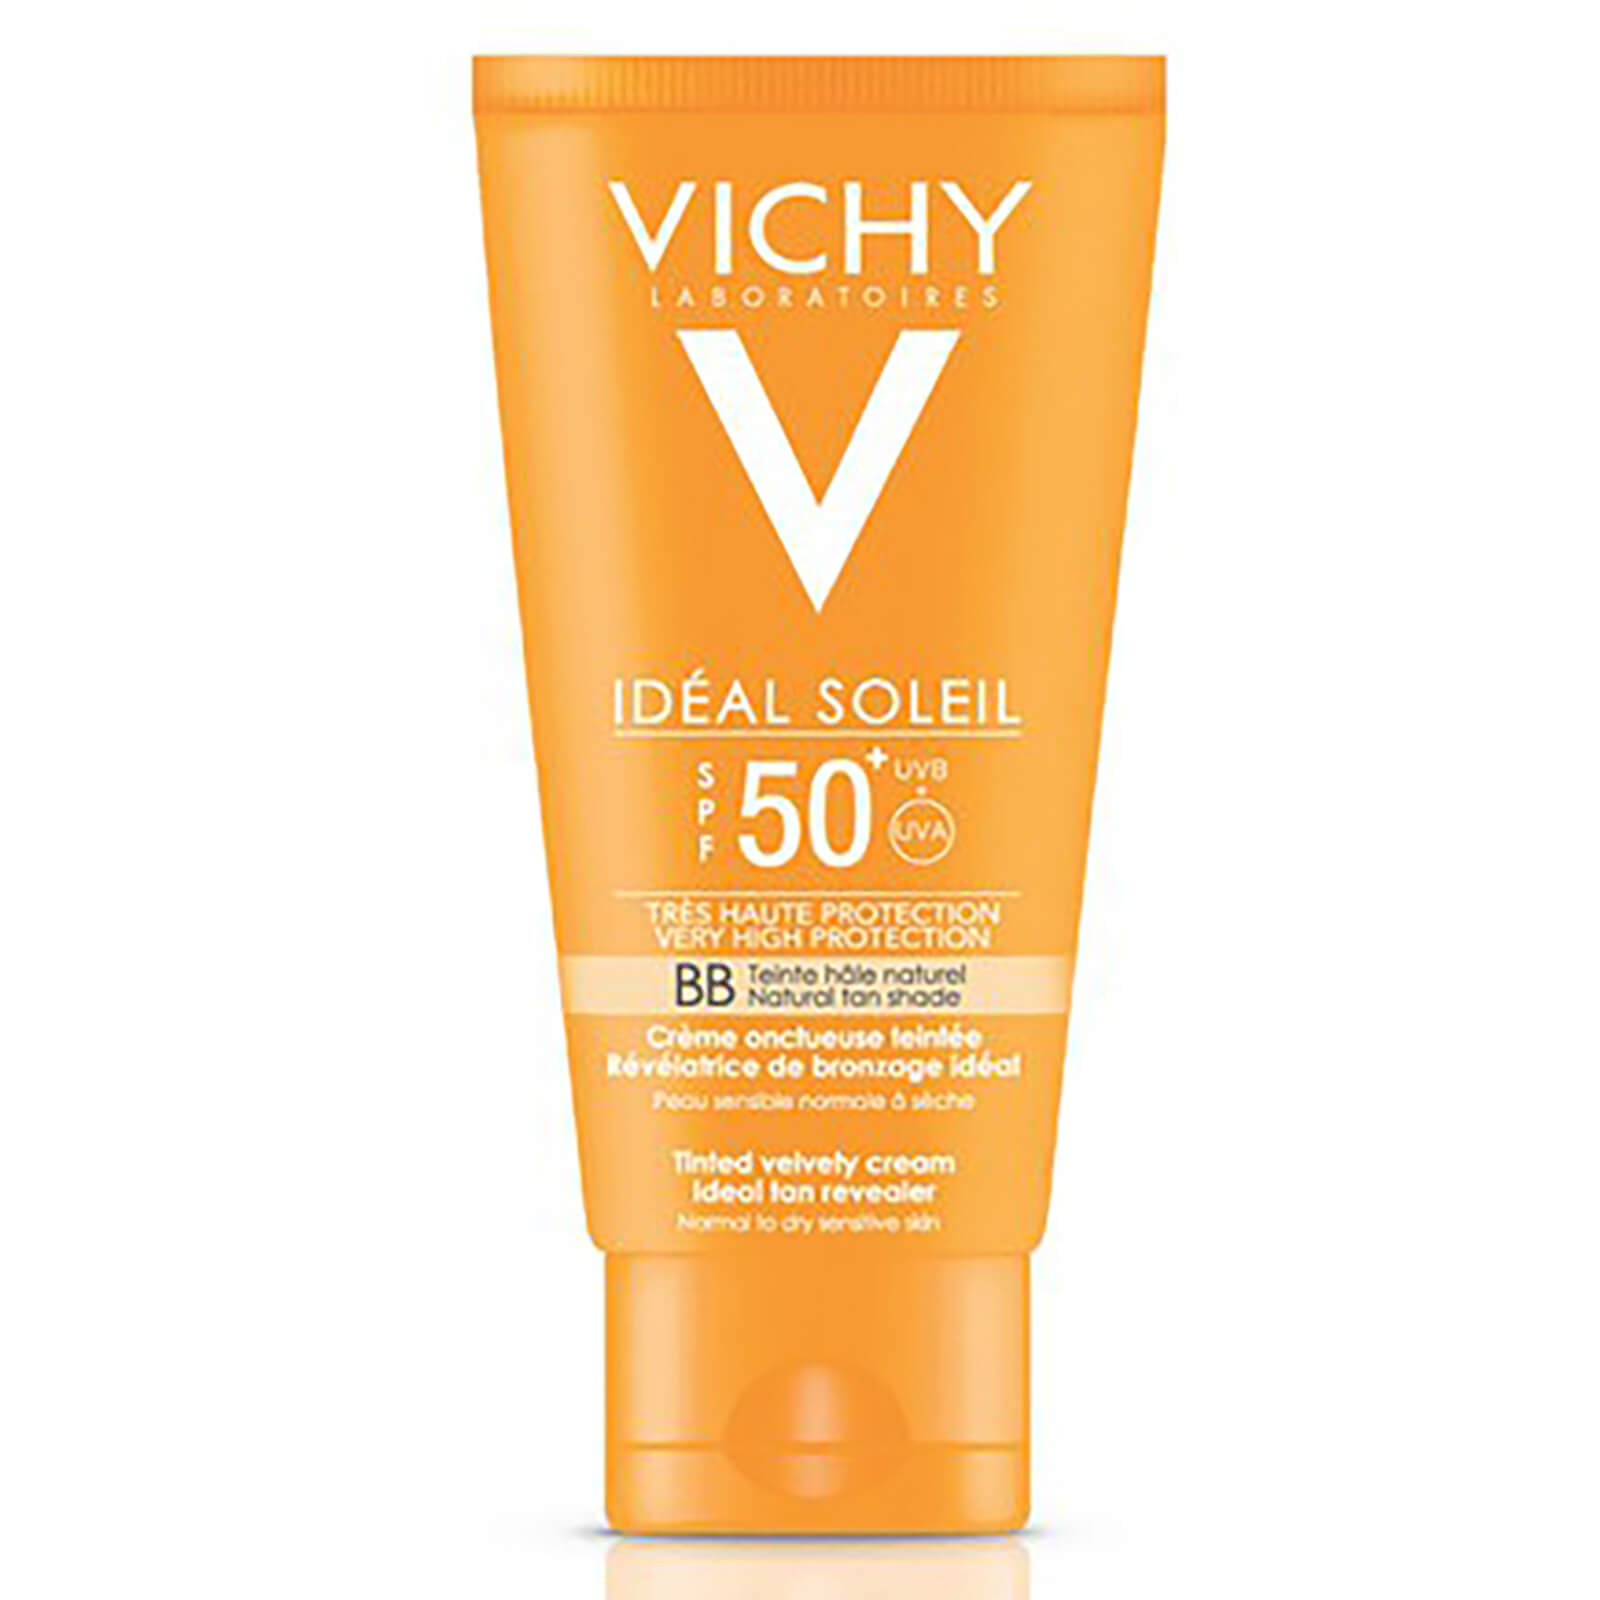 Vichy Ideal Soleil Velvety BB Cream SPF 50 50ml